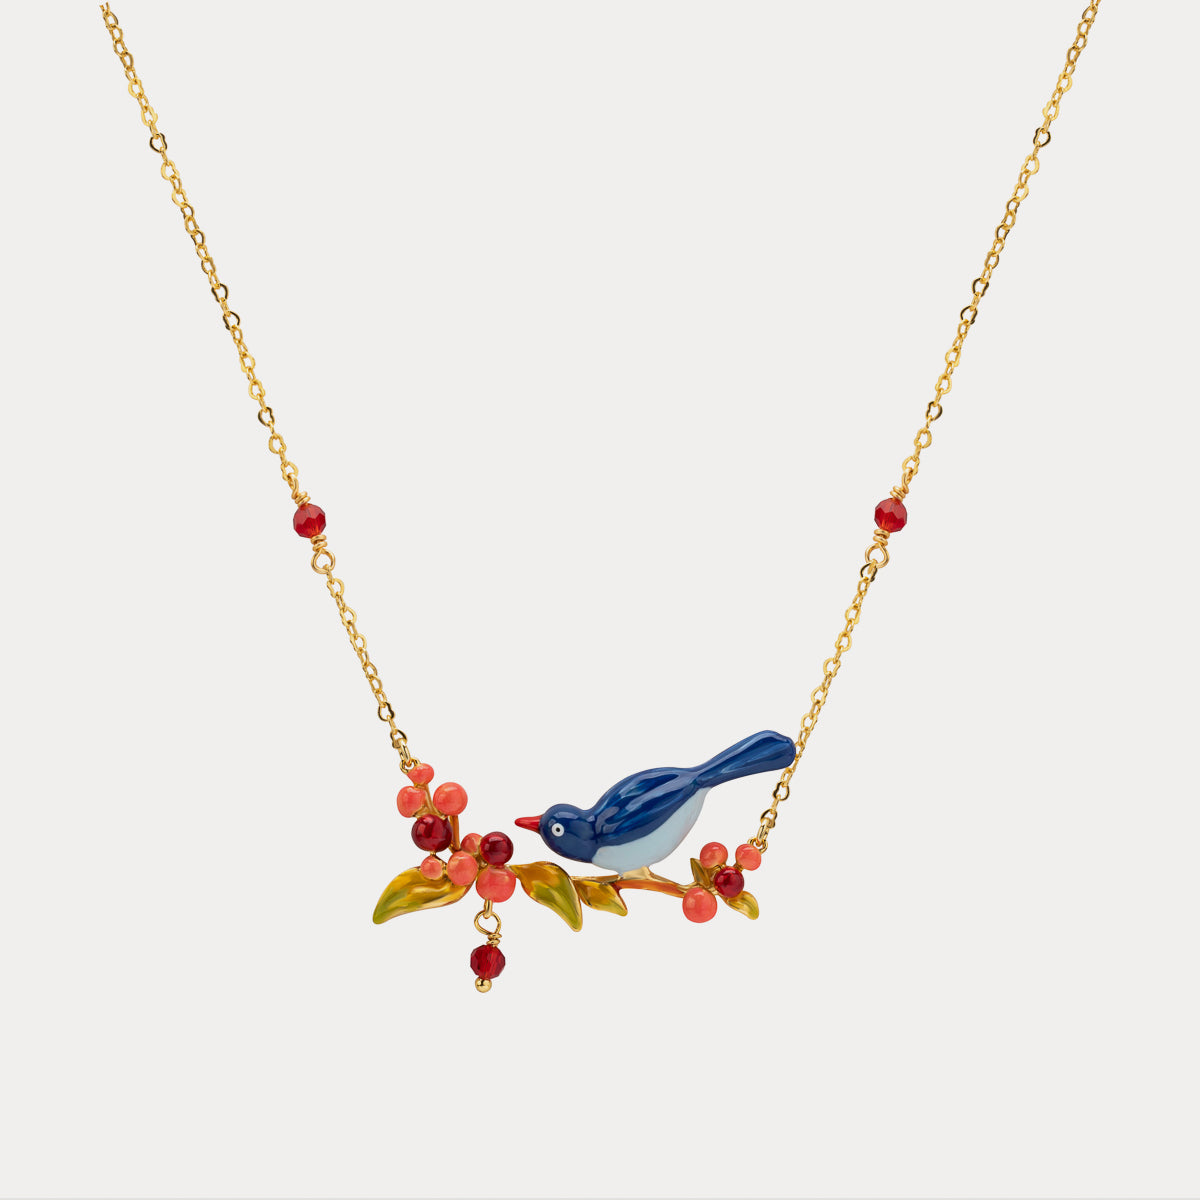 Selenichast pair of lovebirds necklace